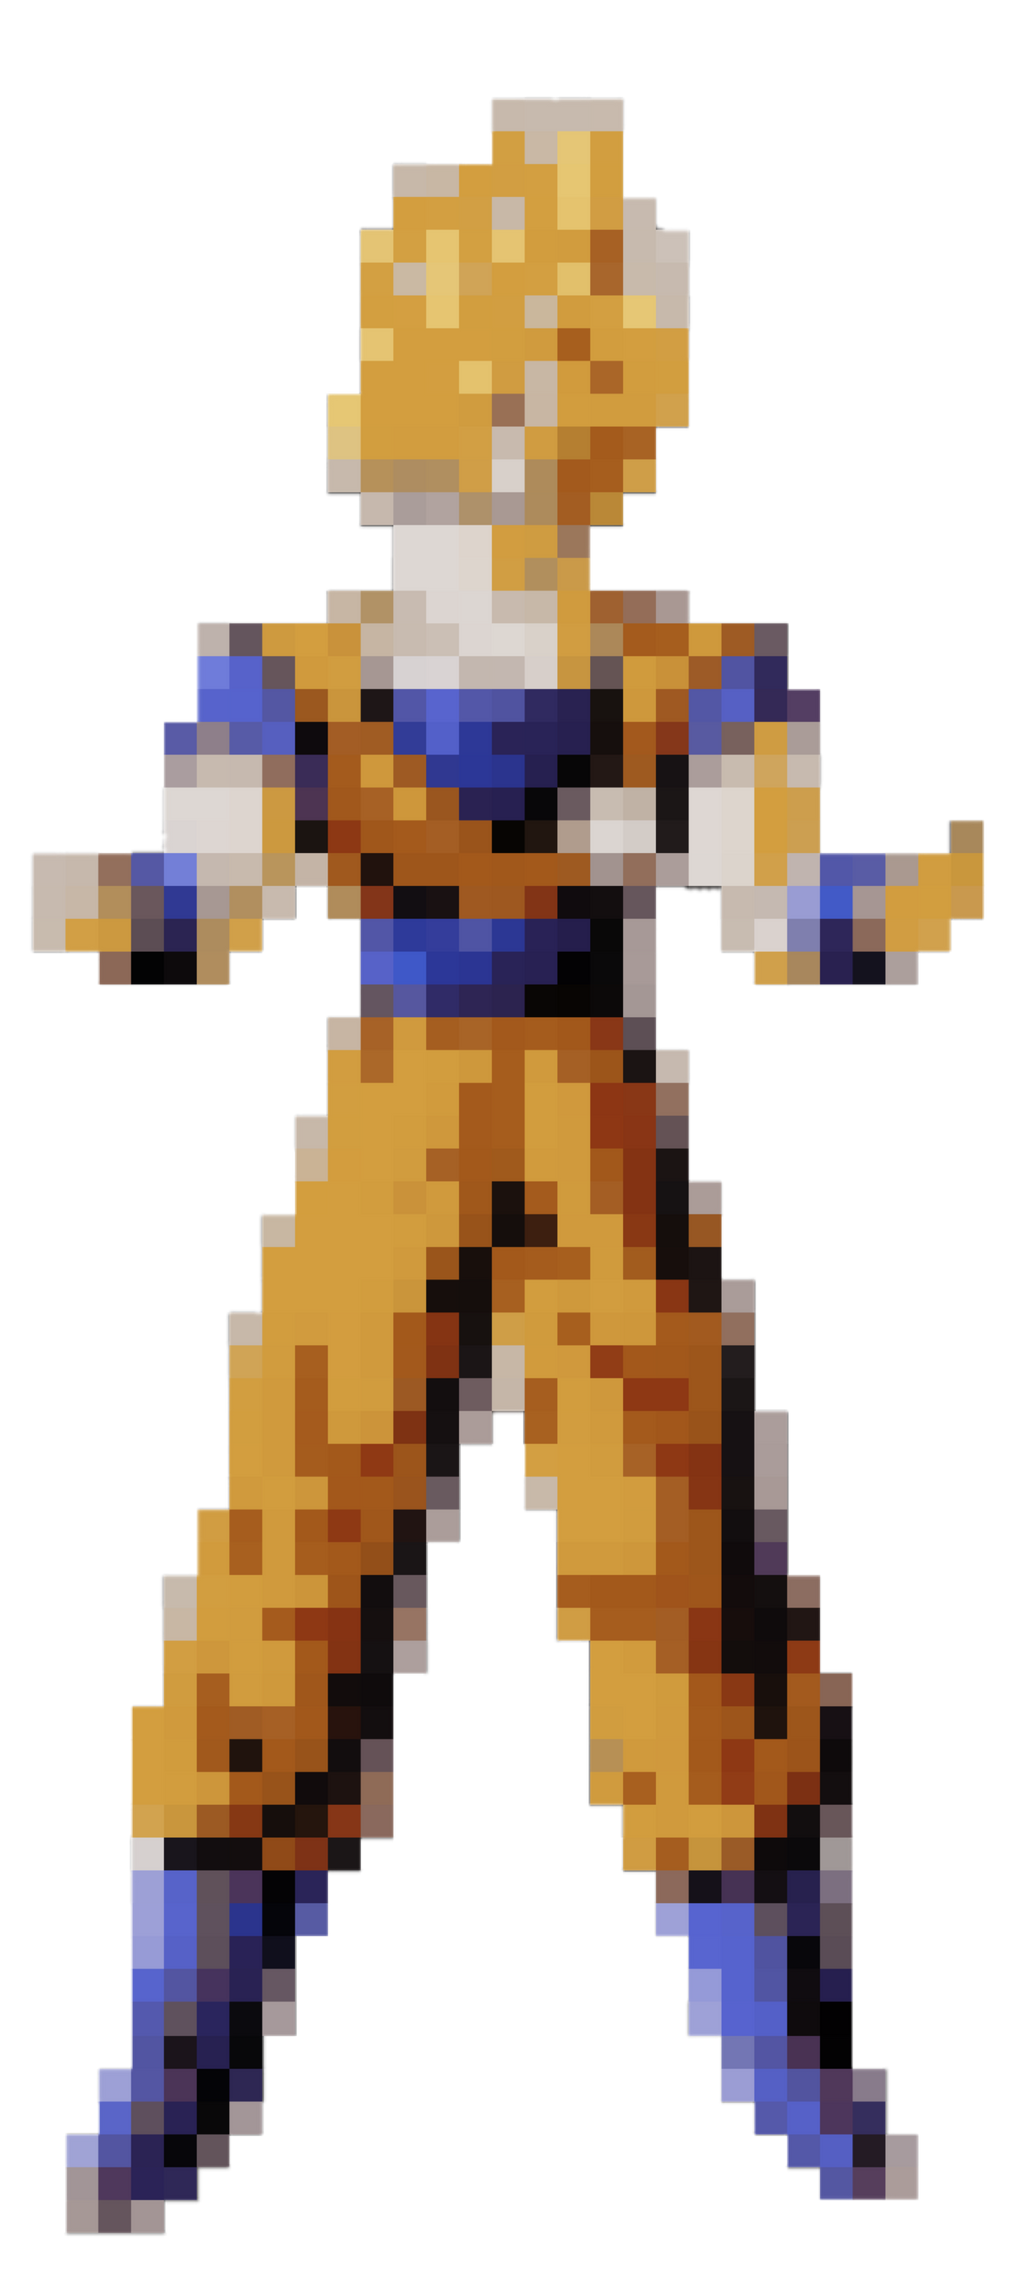 8-Bit Super Saiyan Goku by GraysonGoodwin on DeviantArt